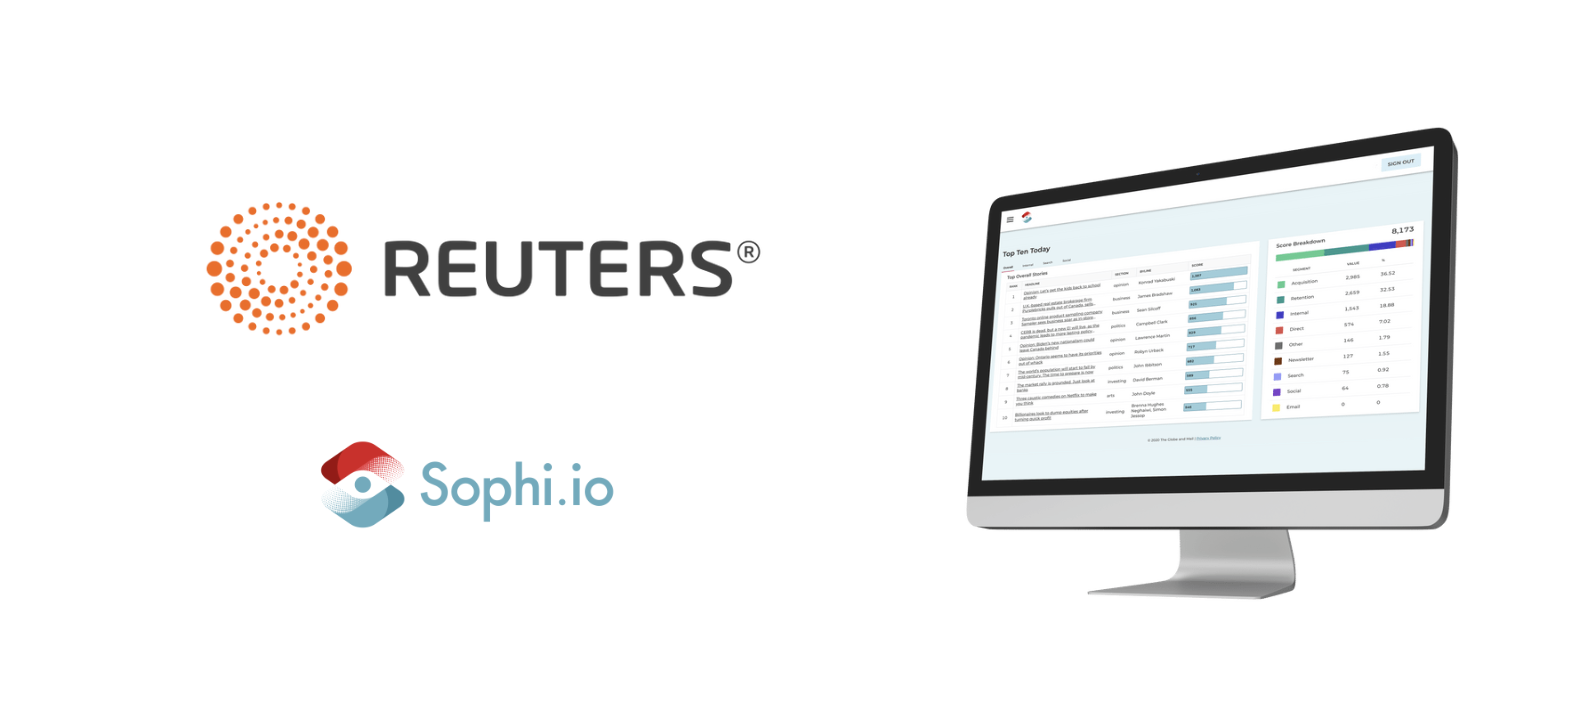 Reuters is Sophi.io customer